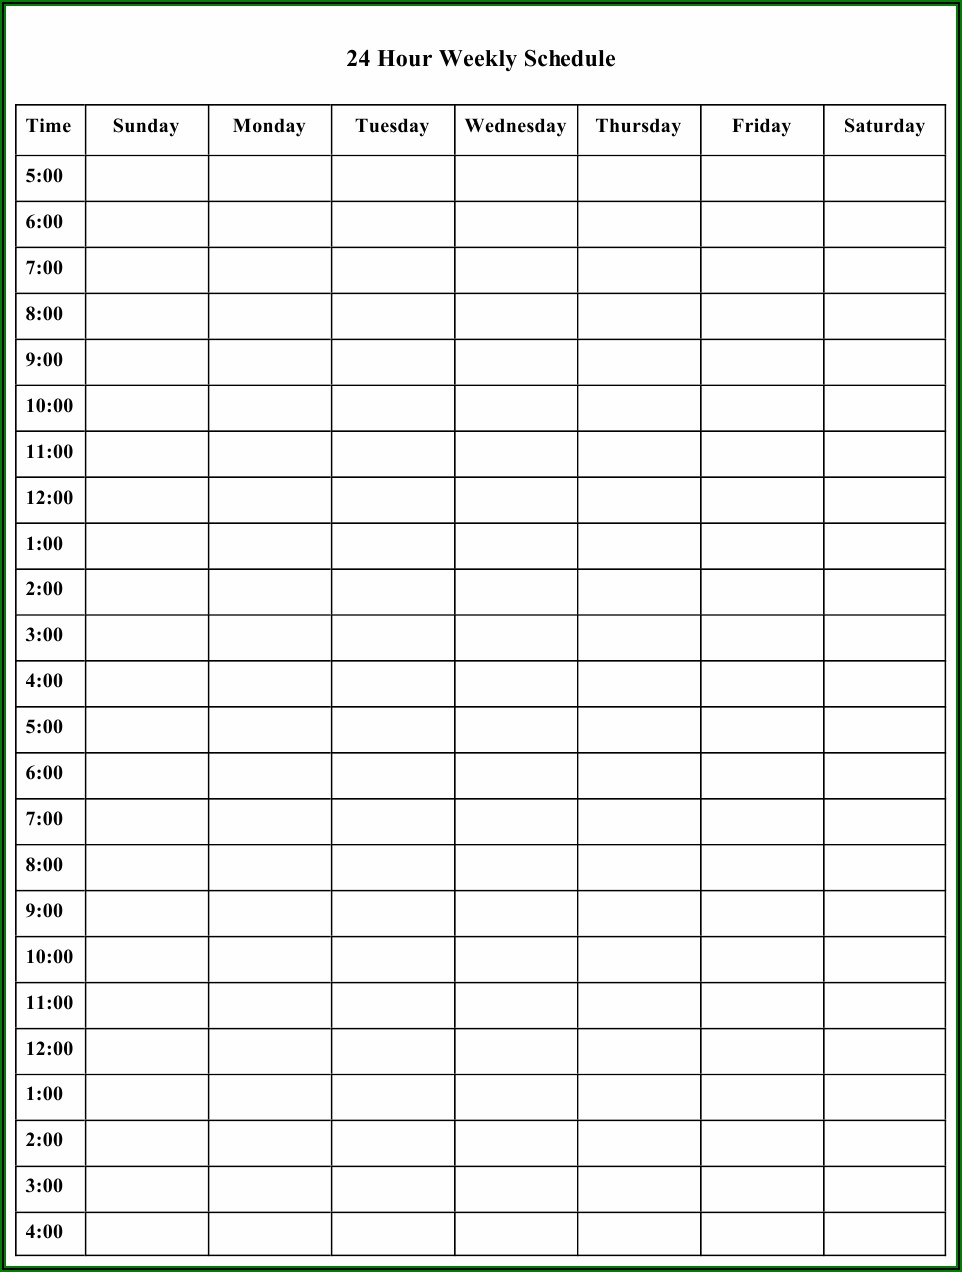 24 Hour Weekly Schedule Template Excel